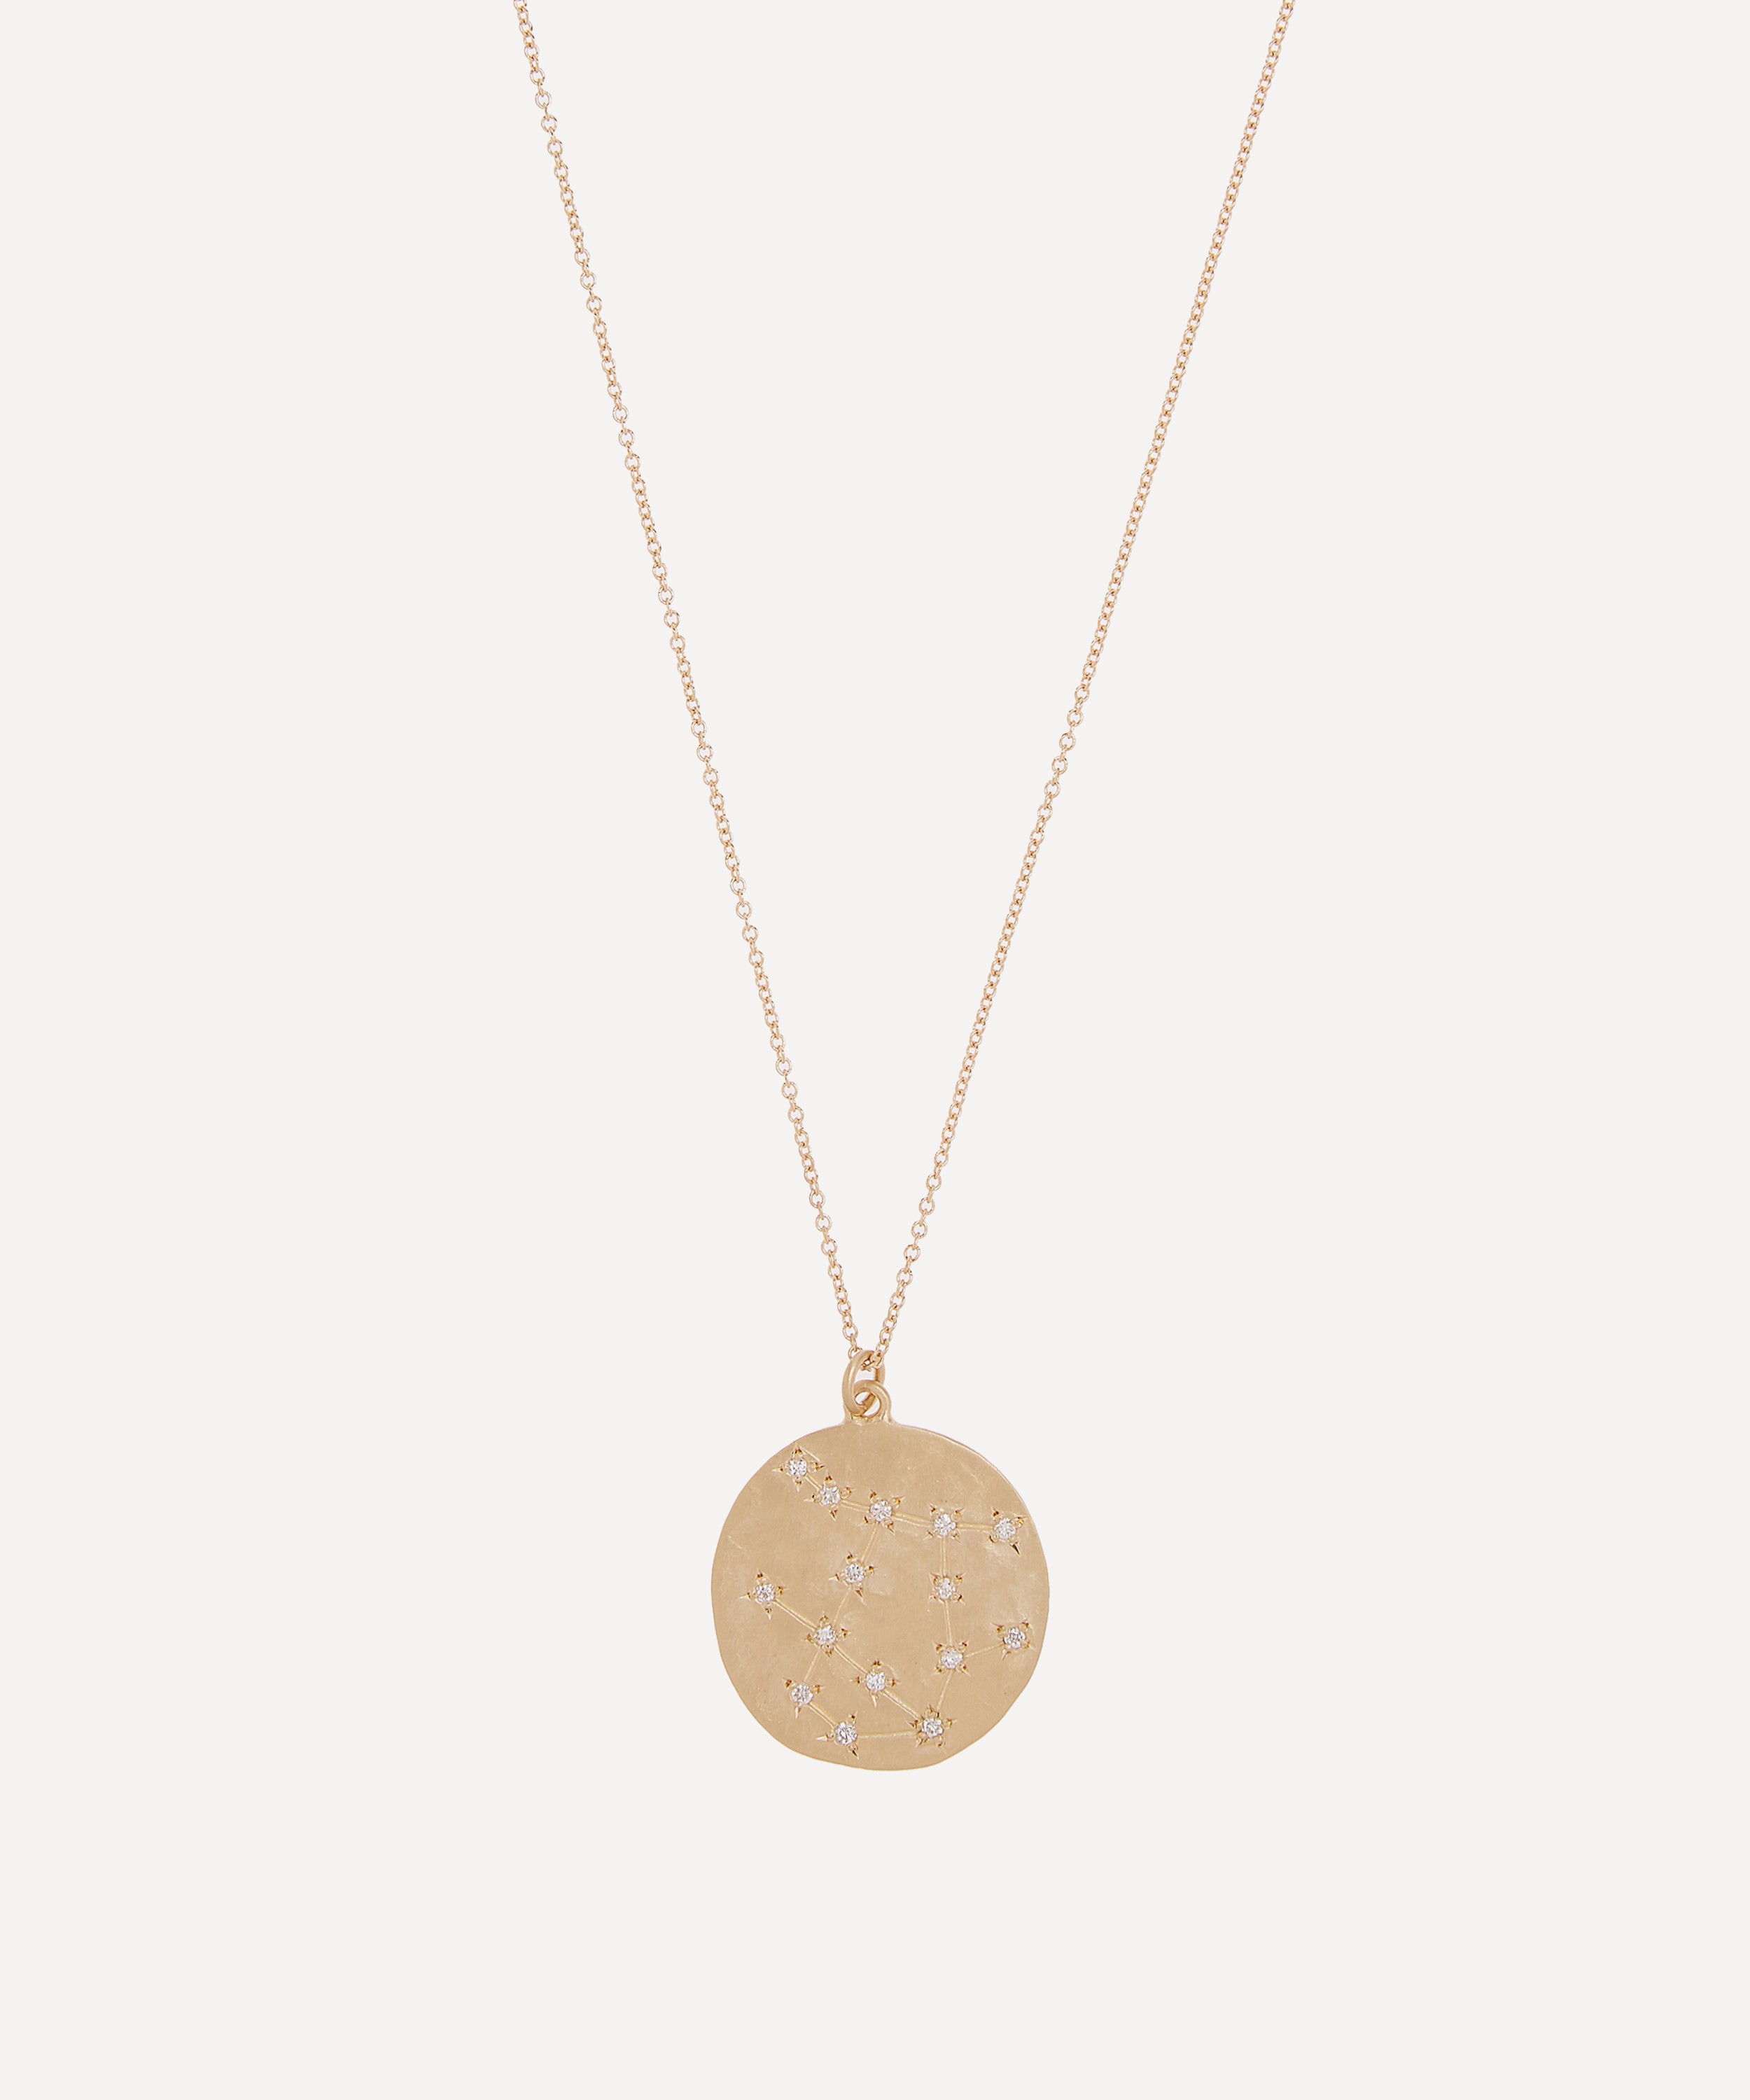 Brooke Gregson - Gold Gemini Astrology Diamond Necklace